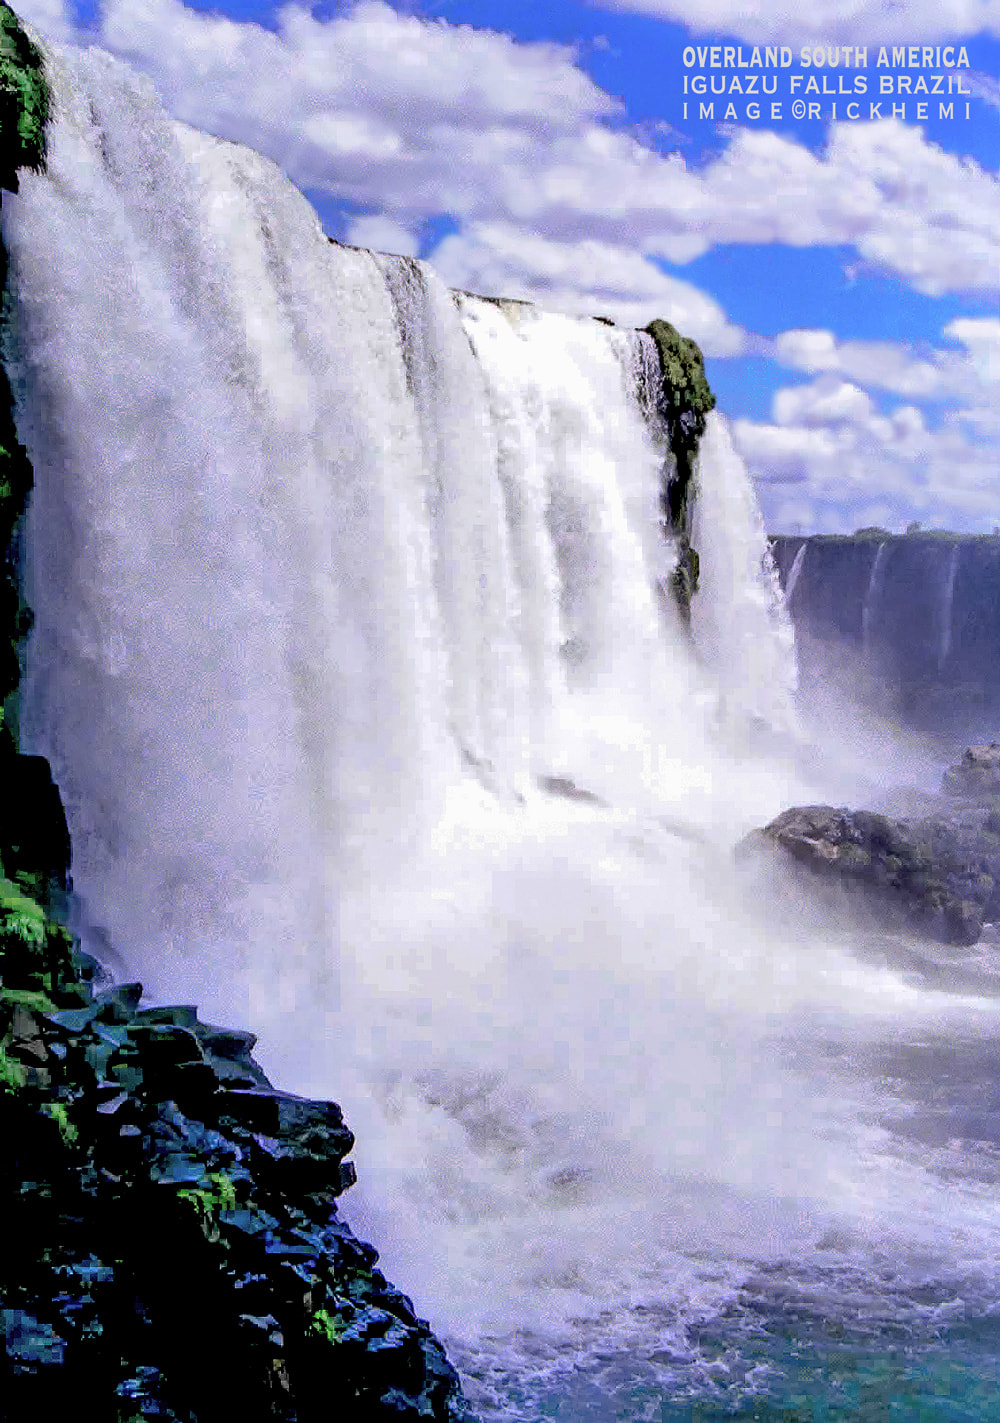 overland travel South America, Iguazu falls image by Rick Hemi